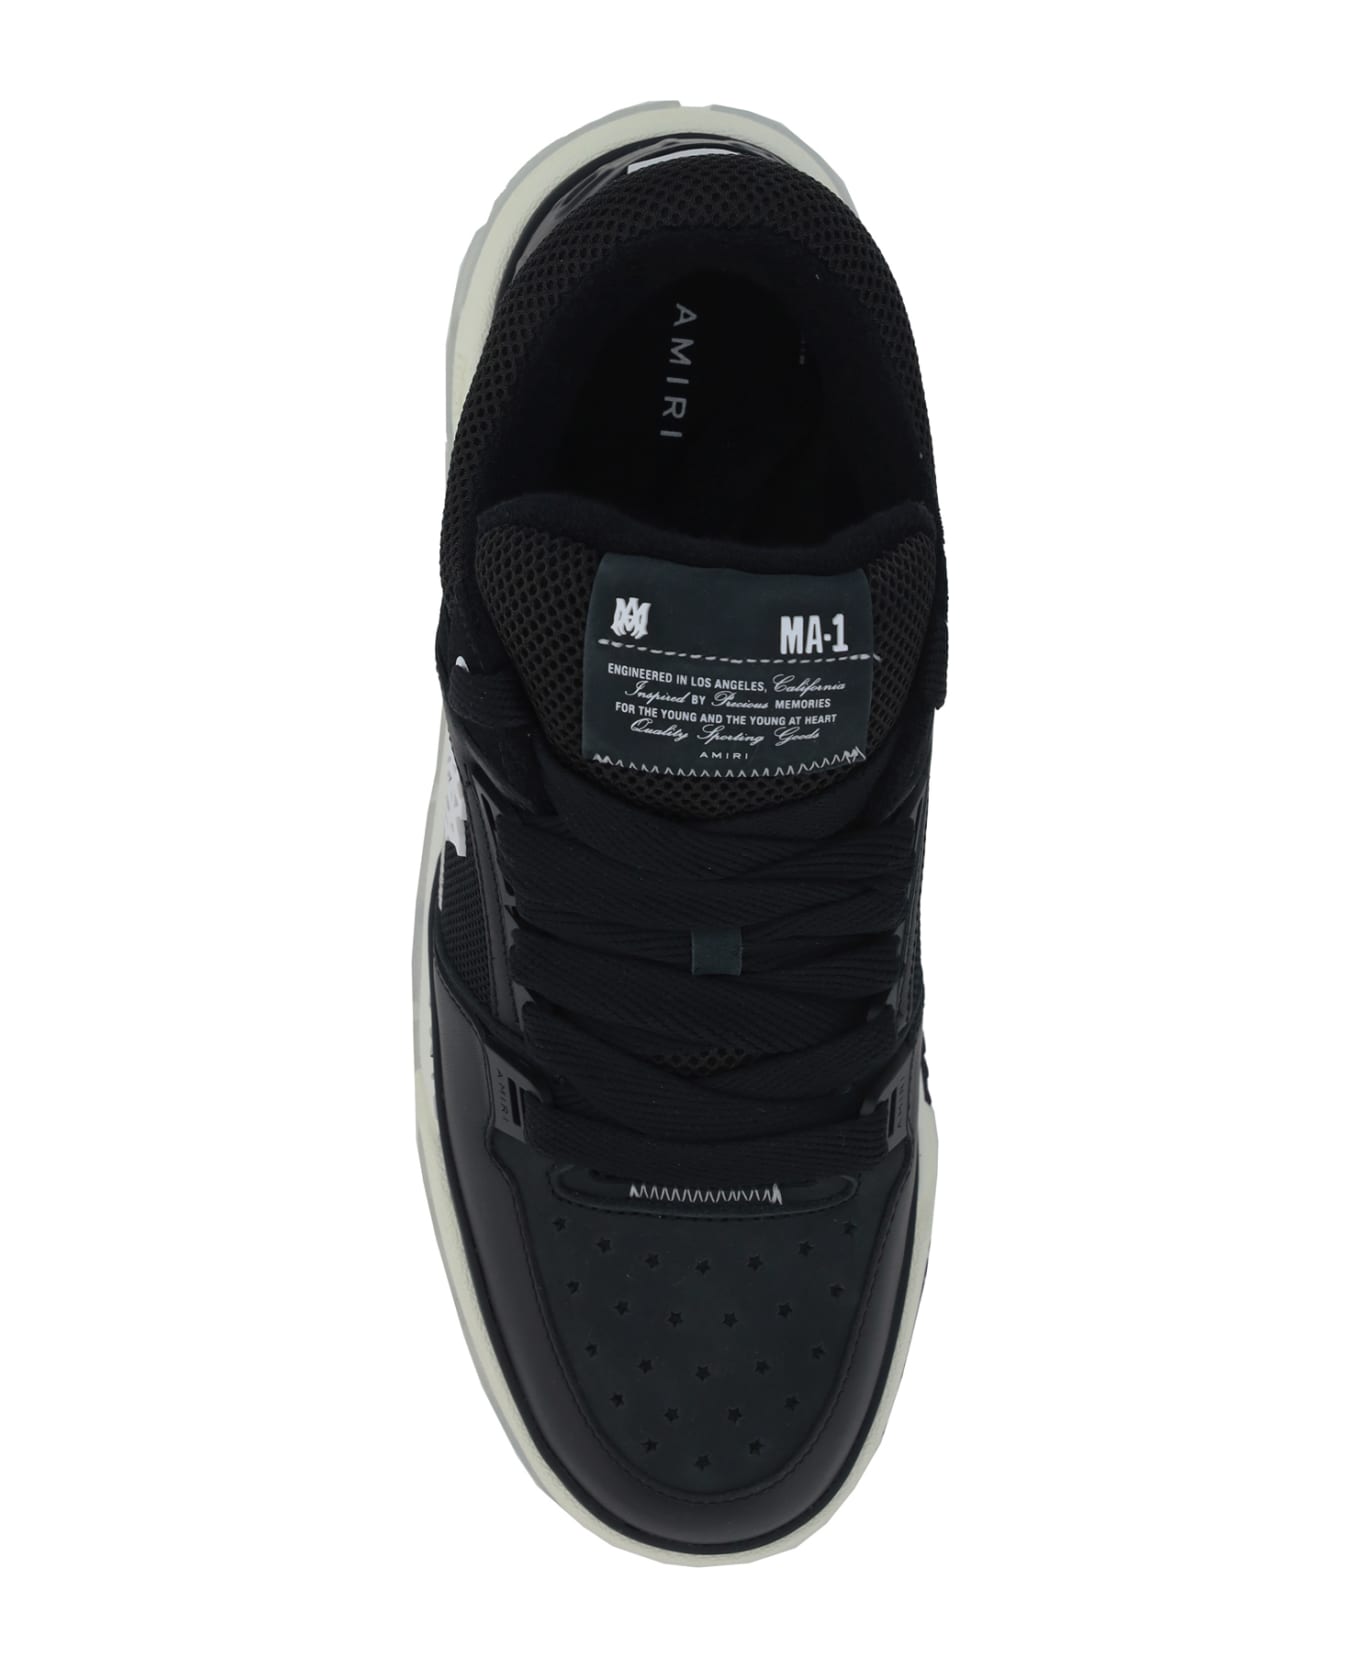 AMIRI Sneakers - Black